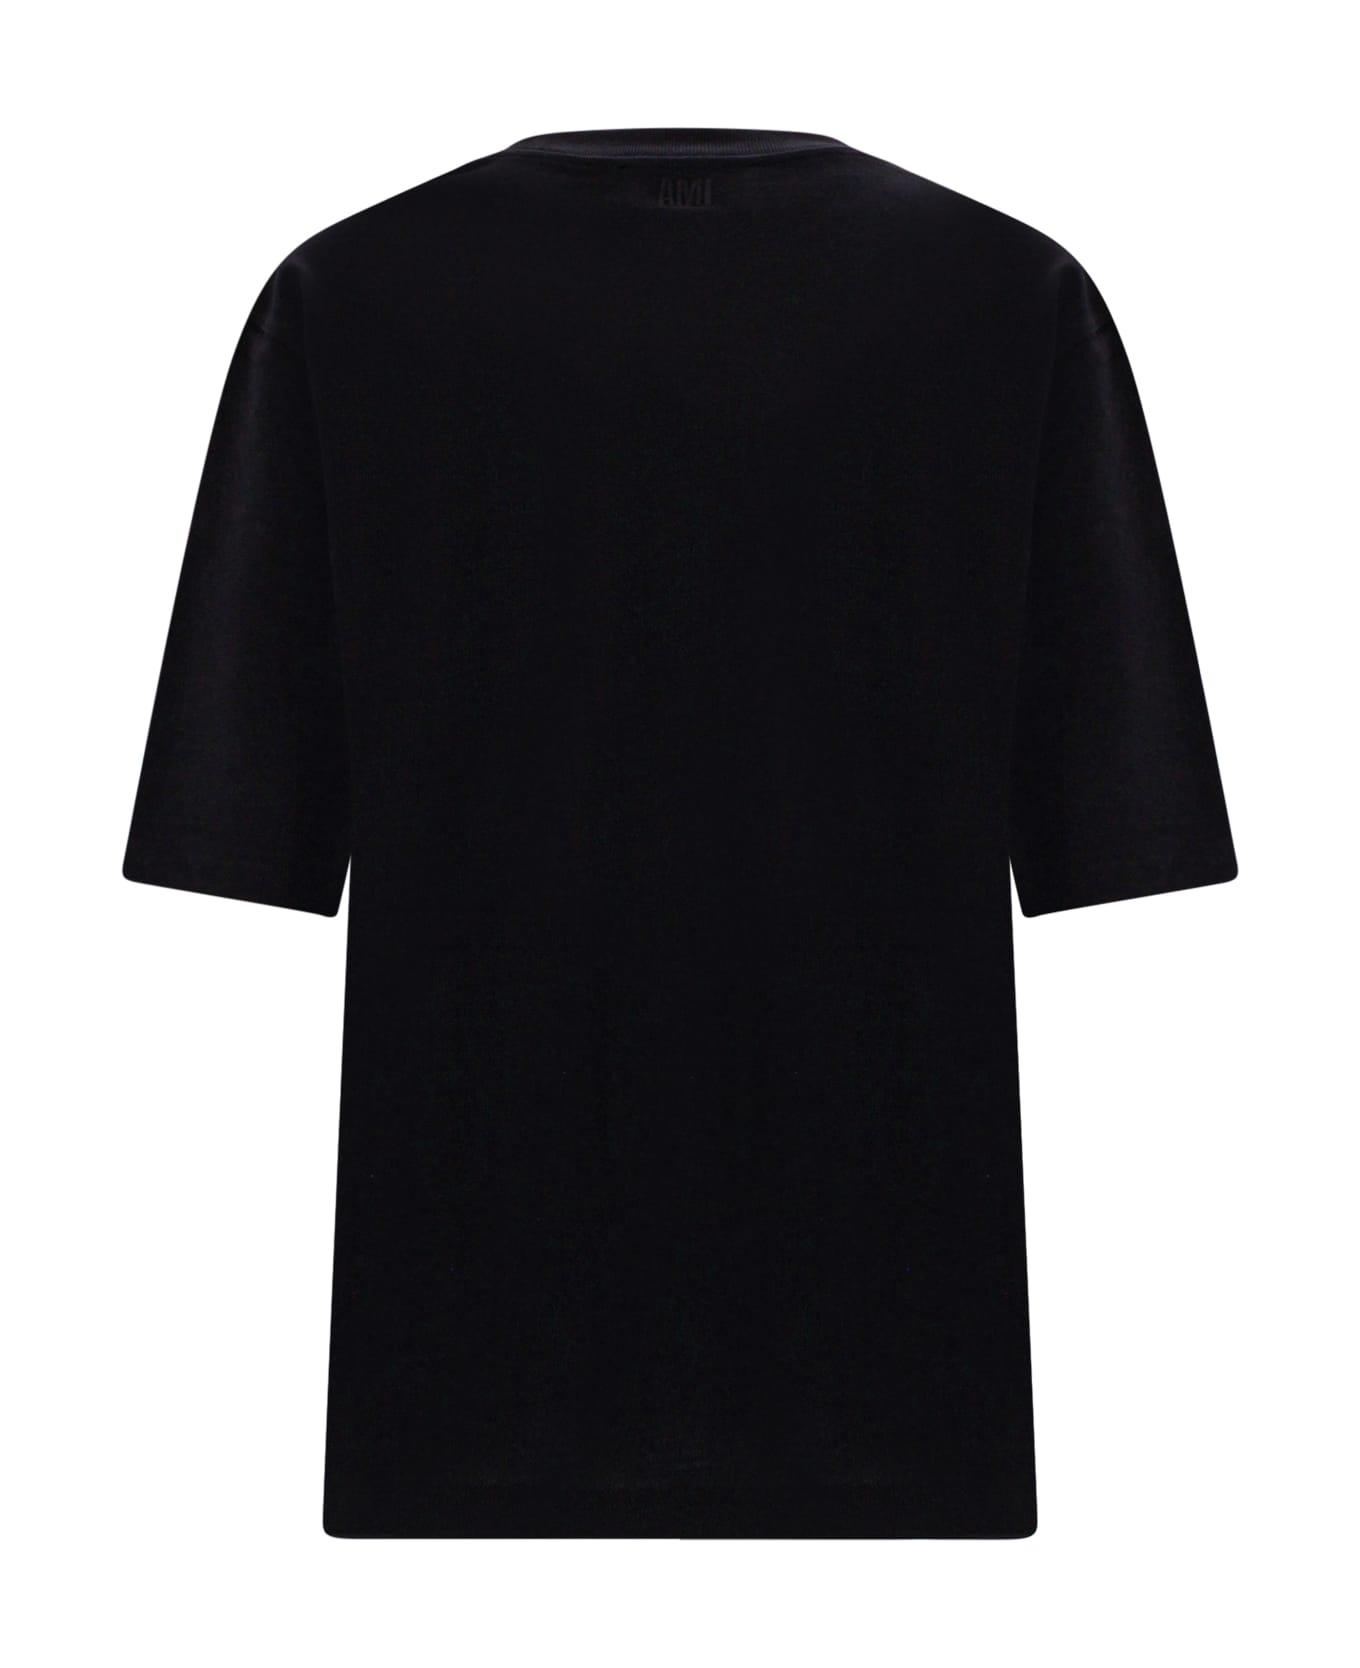 Ami Alexandre Mattiussi T-shirt - Black